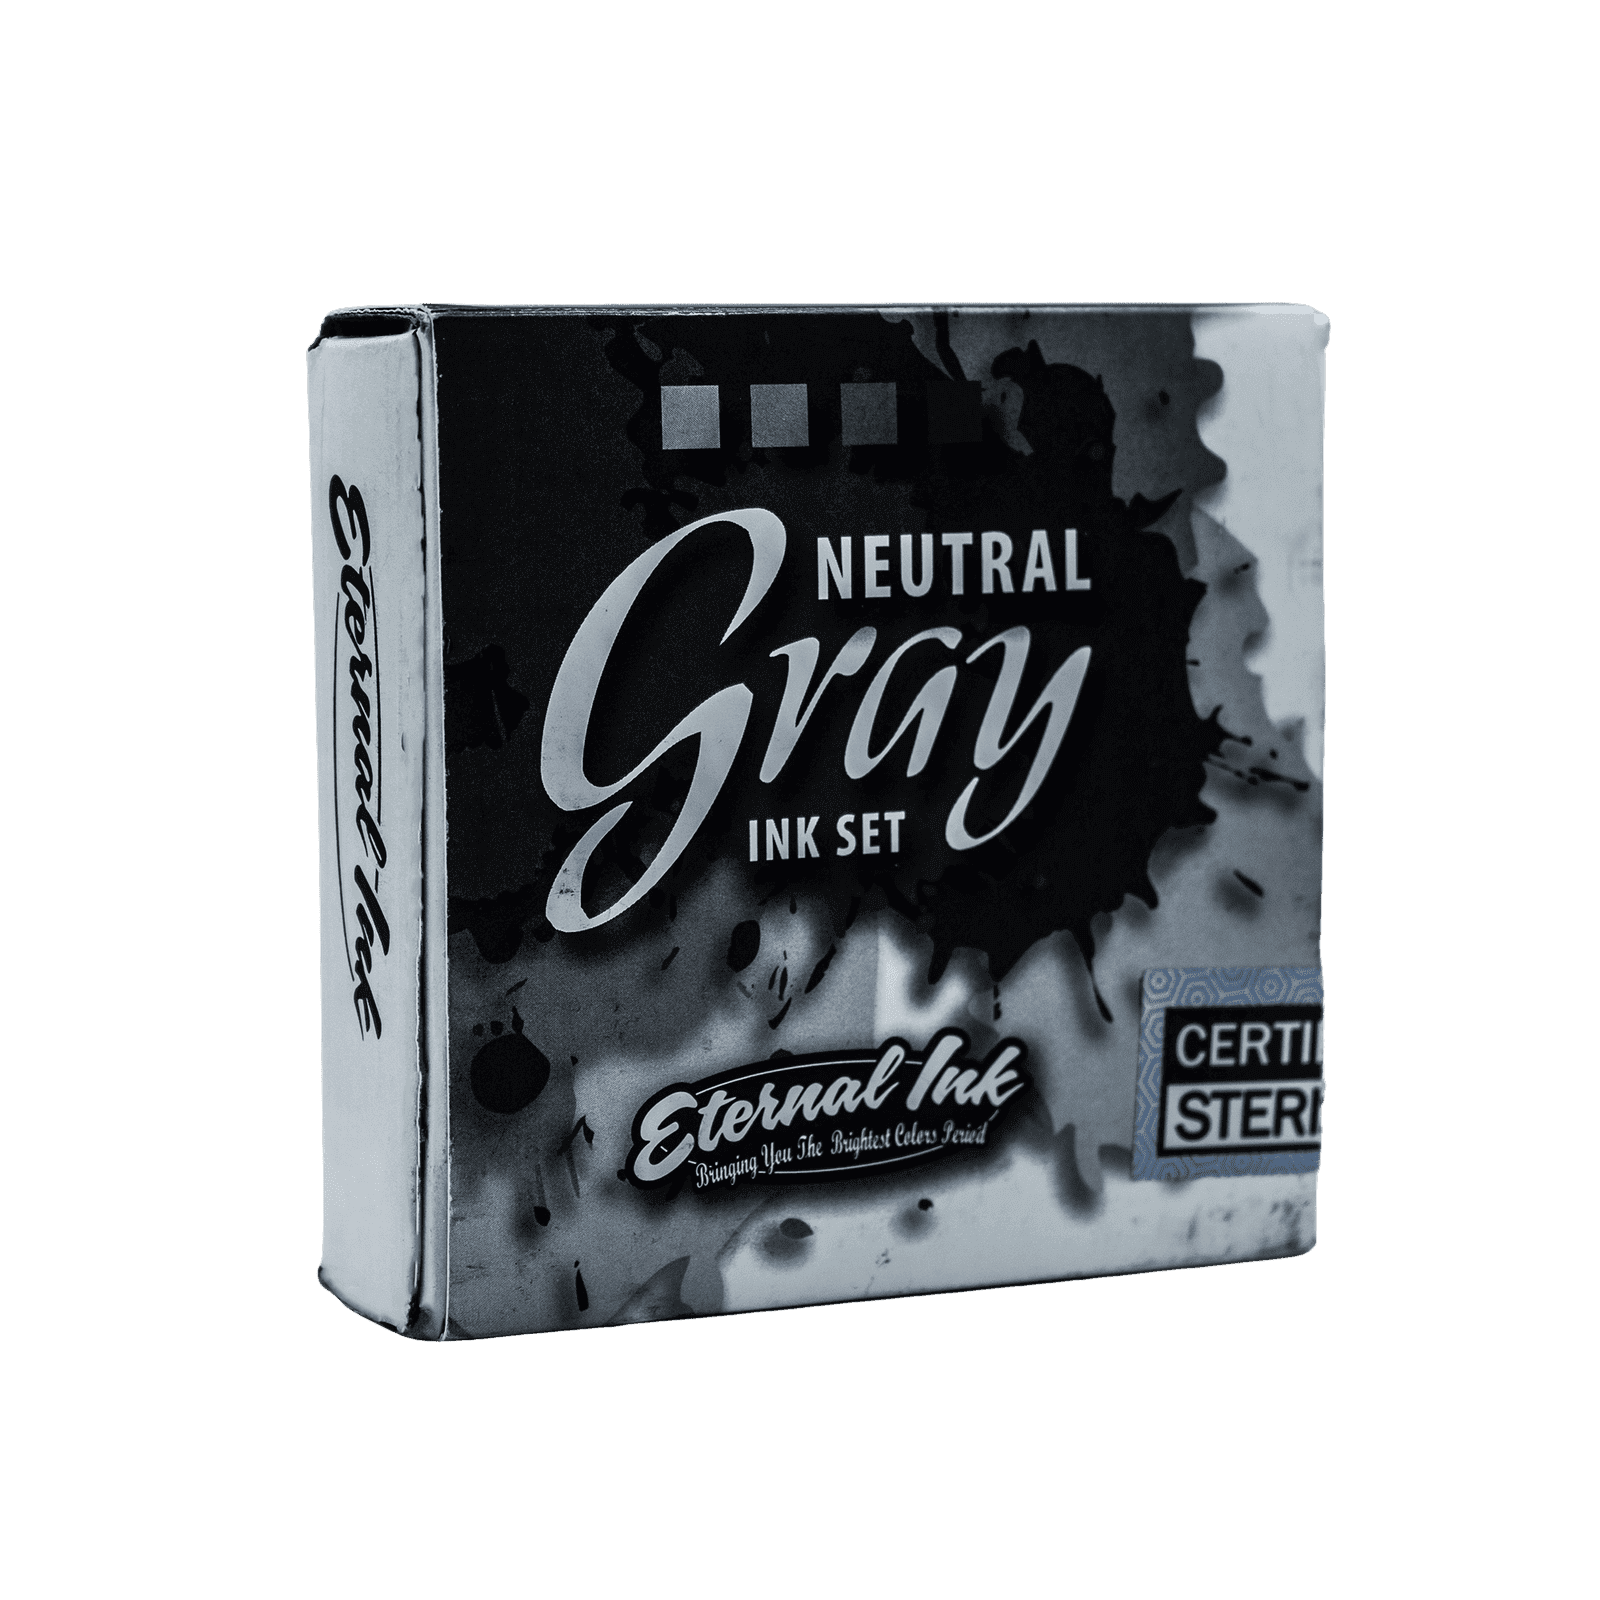 NEUTRAL GRAY INK SET - Eternal ink